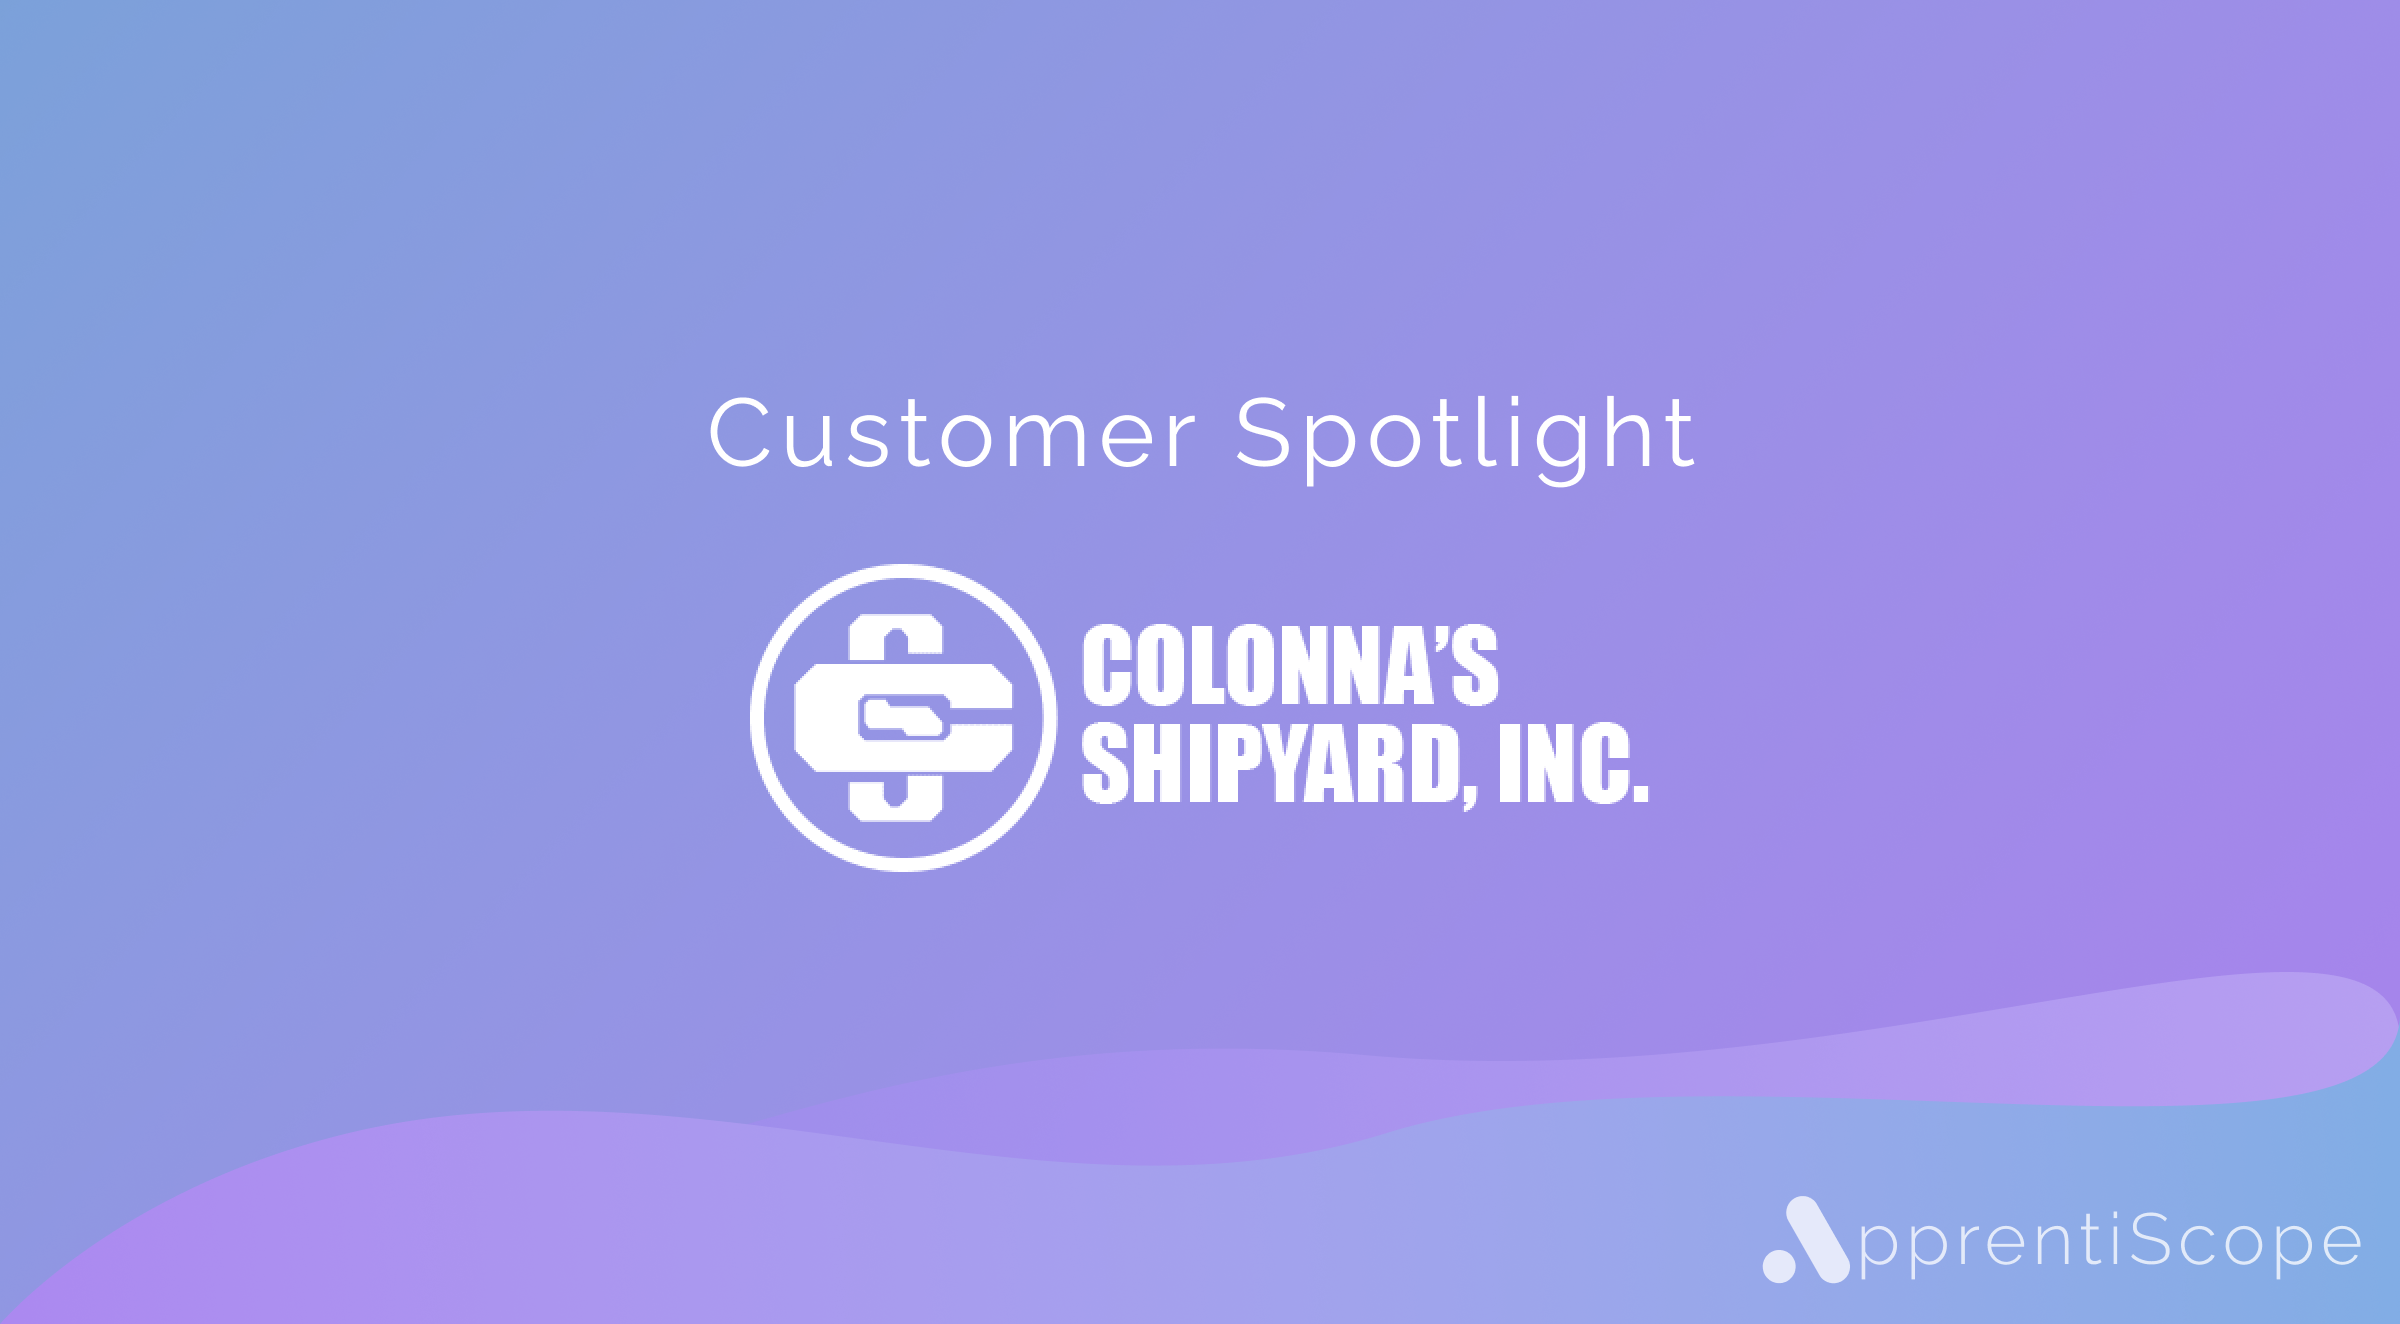 Customer spotlight asset for Colonna's shipyard. 